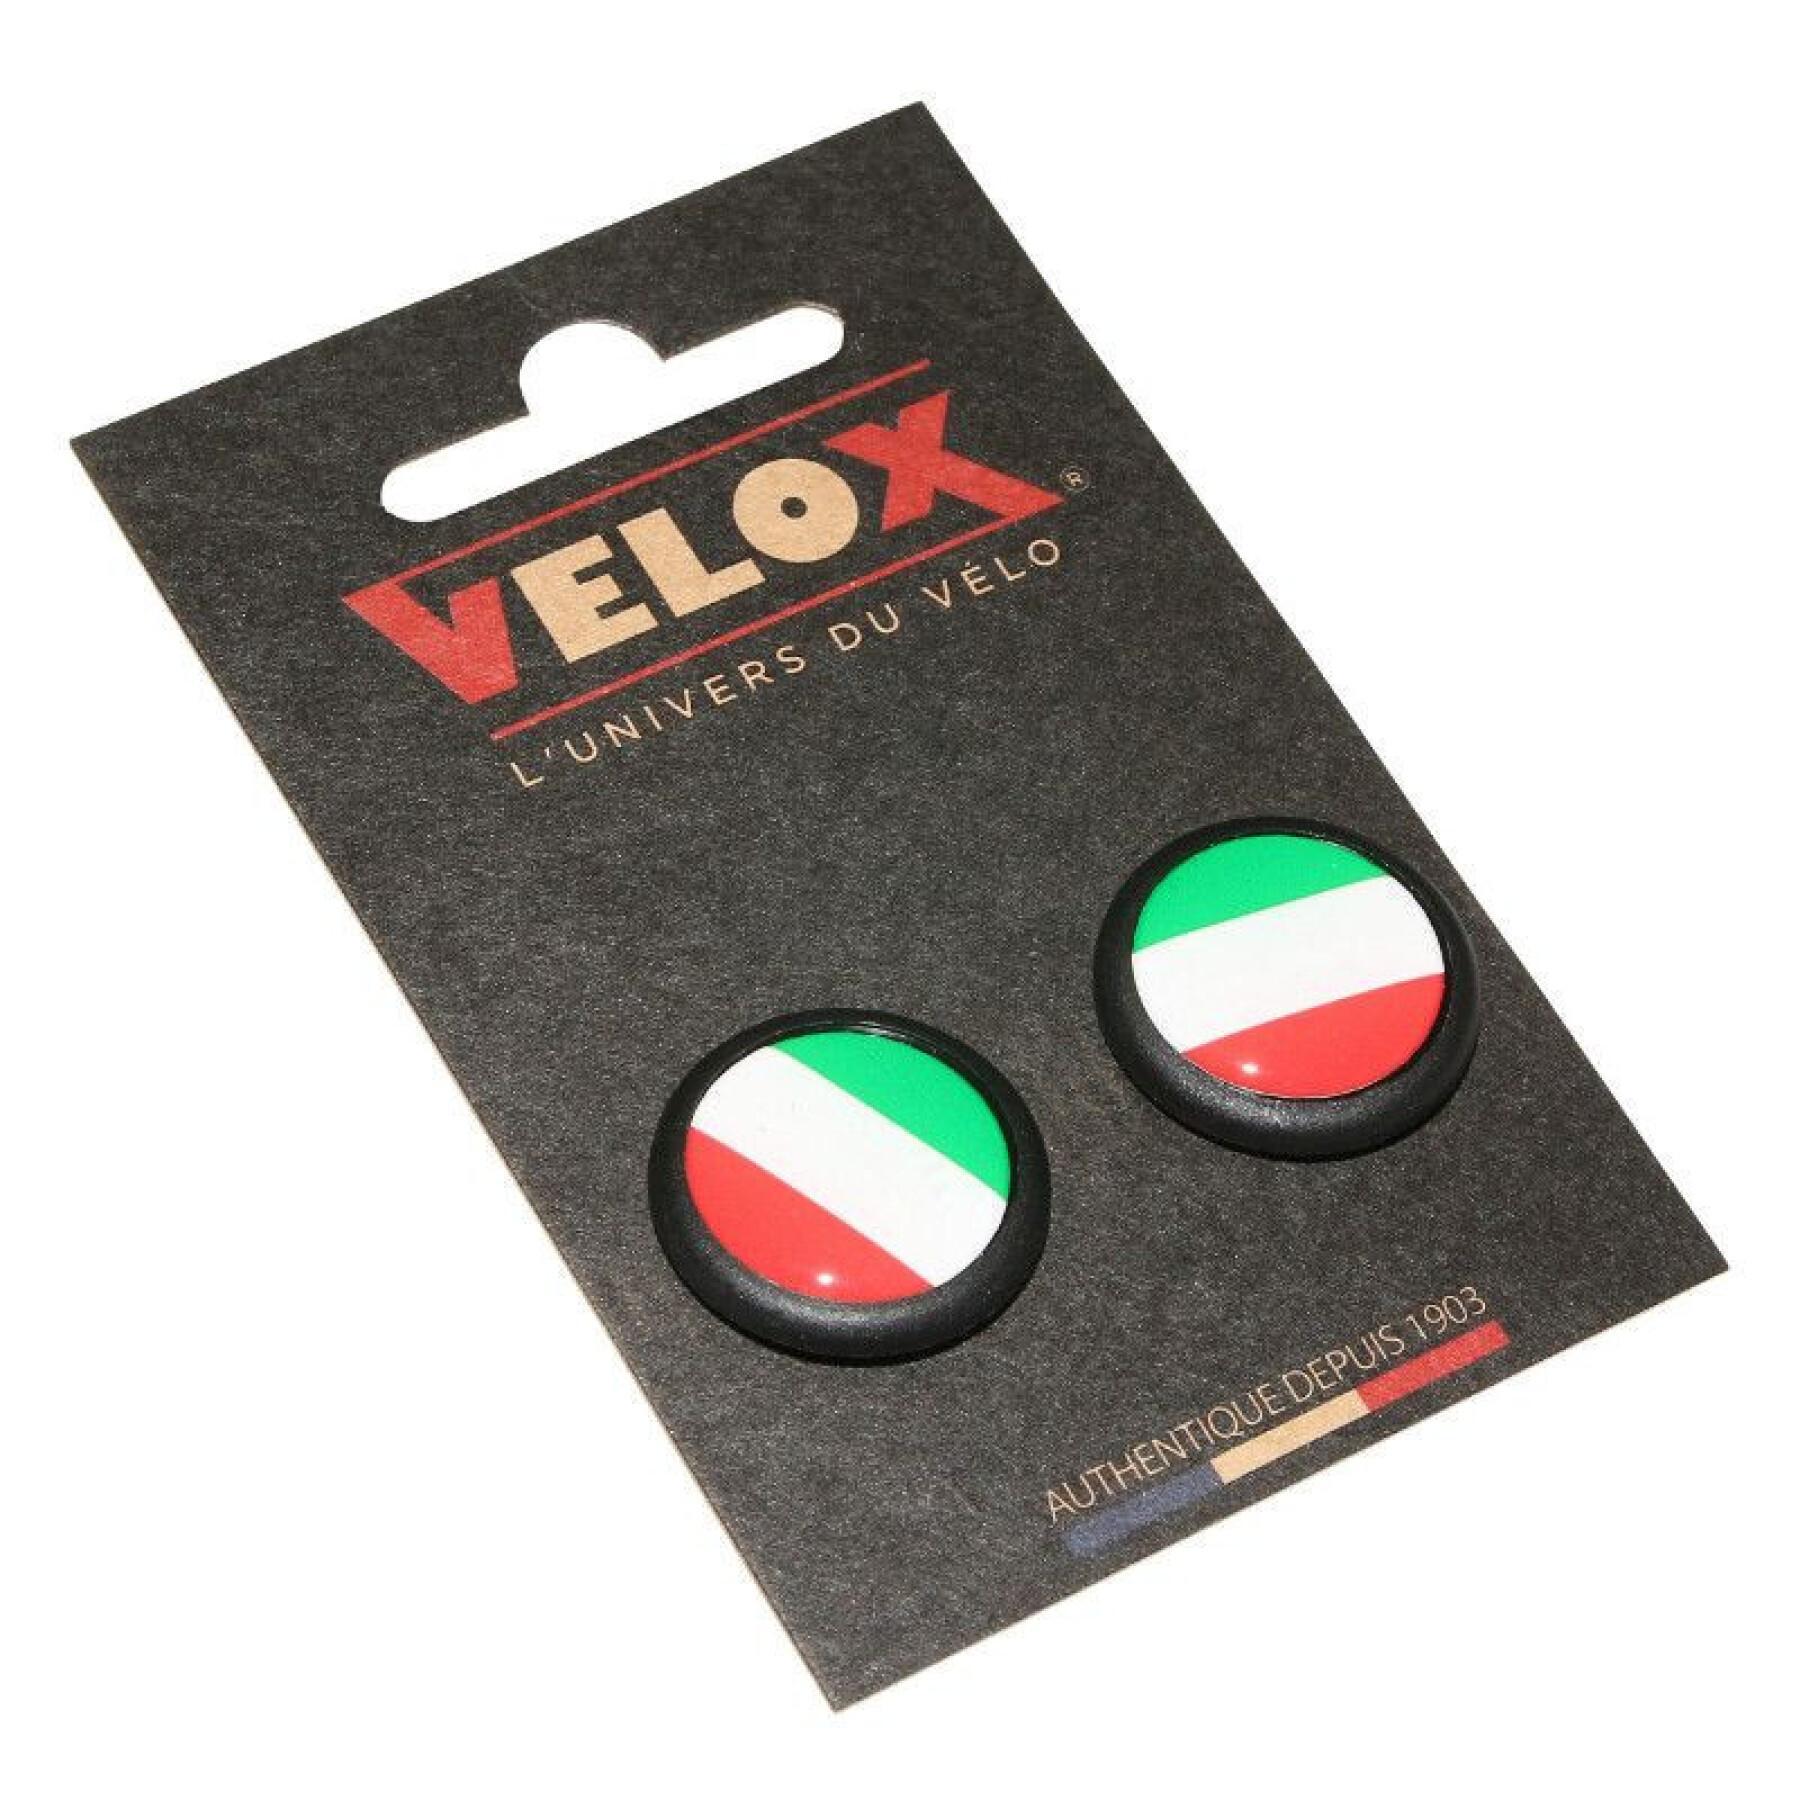 Set of 2 handlebar caps for road bikes Velox Doming italie